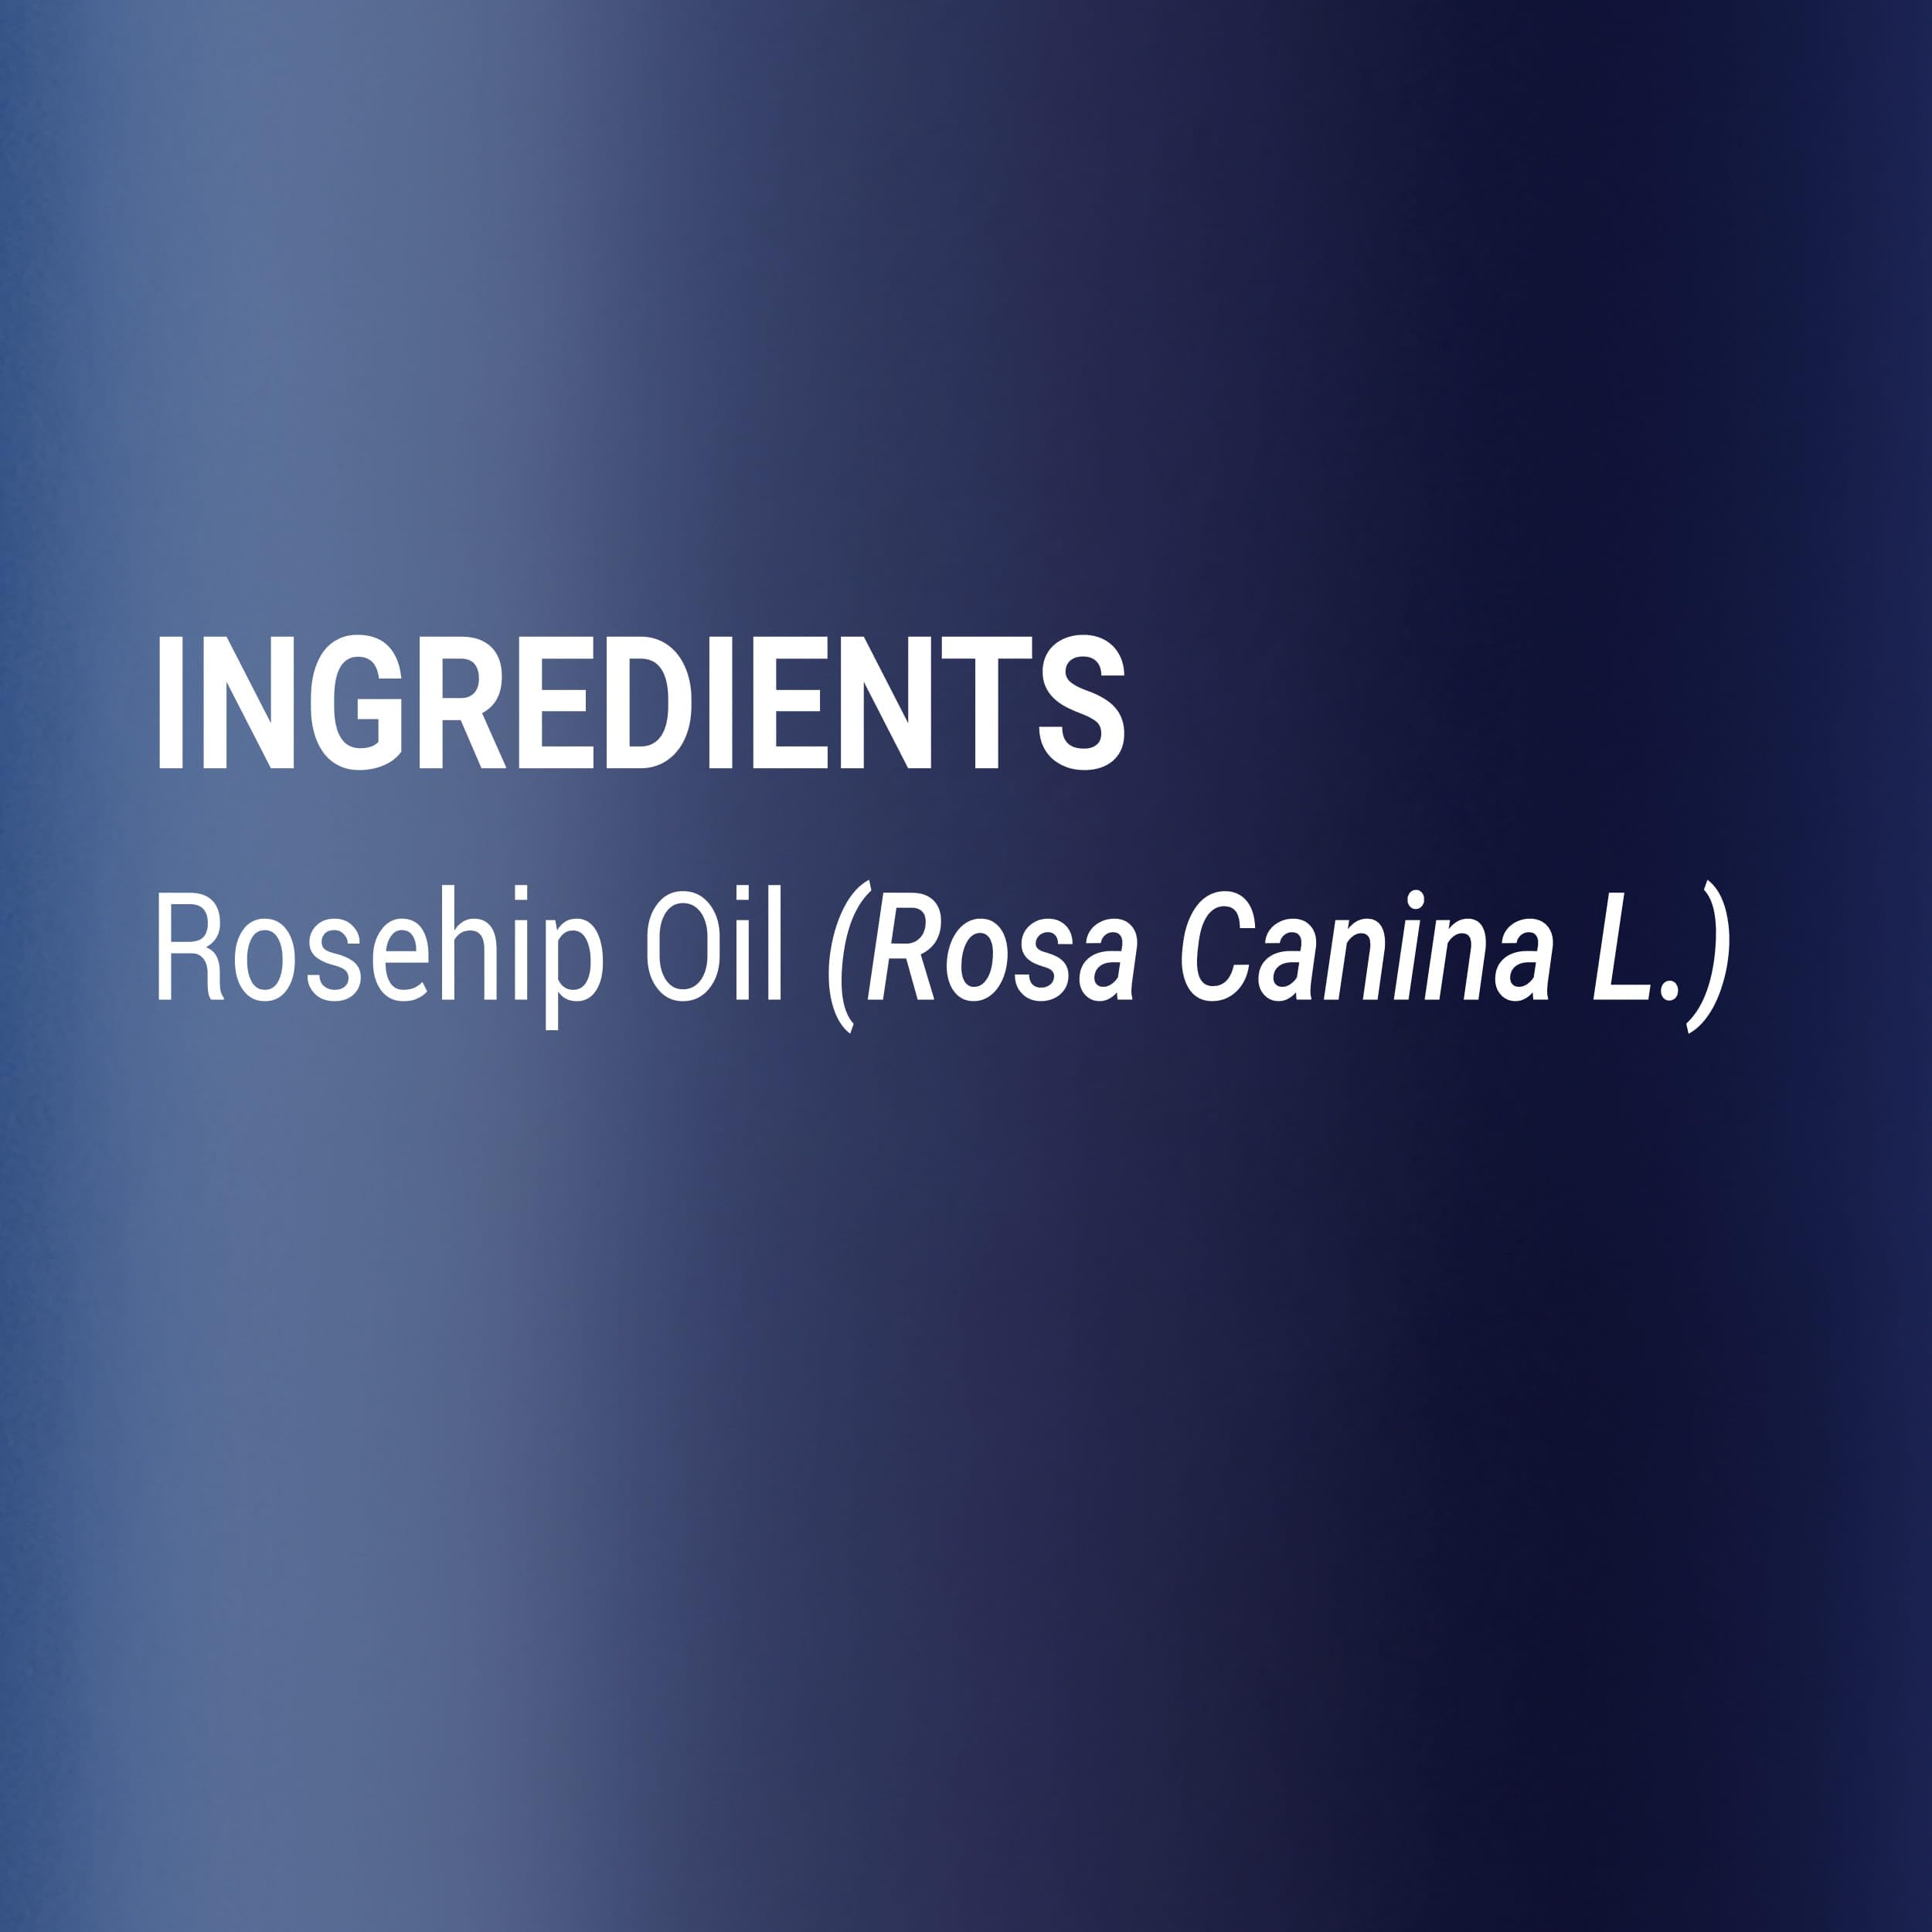 Nexon Botanics Organic Rosehip Oil for Face 8 fl oz - Gua Sha Oil - Facial Oil for Gua Sha Massage - Rose Hip Oil - Rosehip Seed Oil - Aceite de Rosa Mosqueta